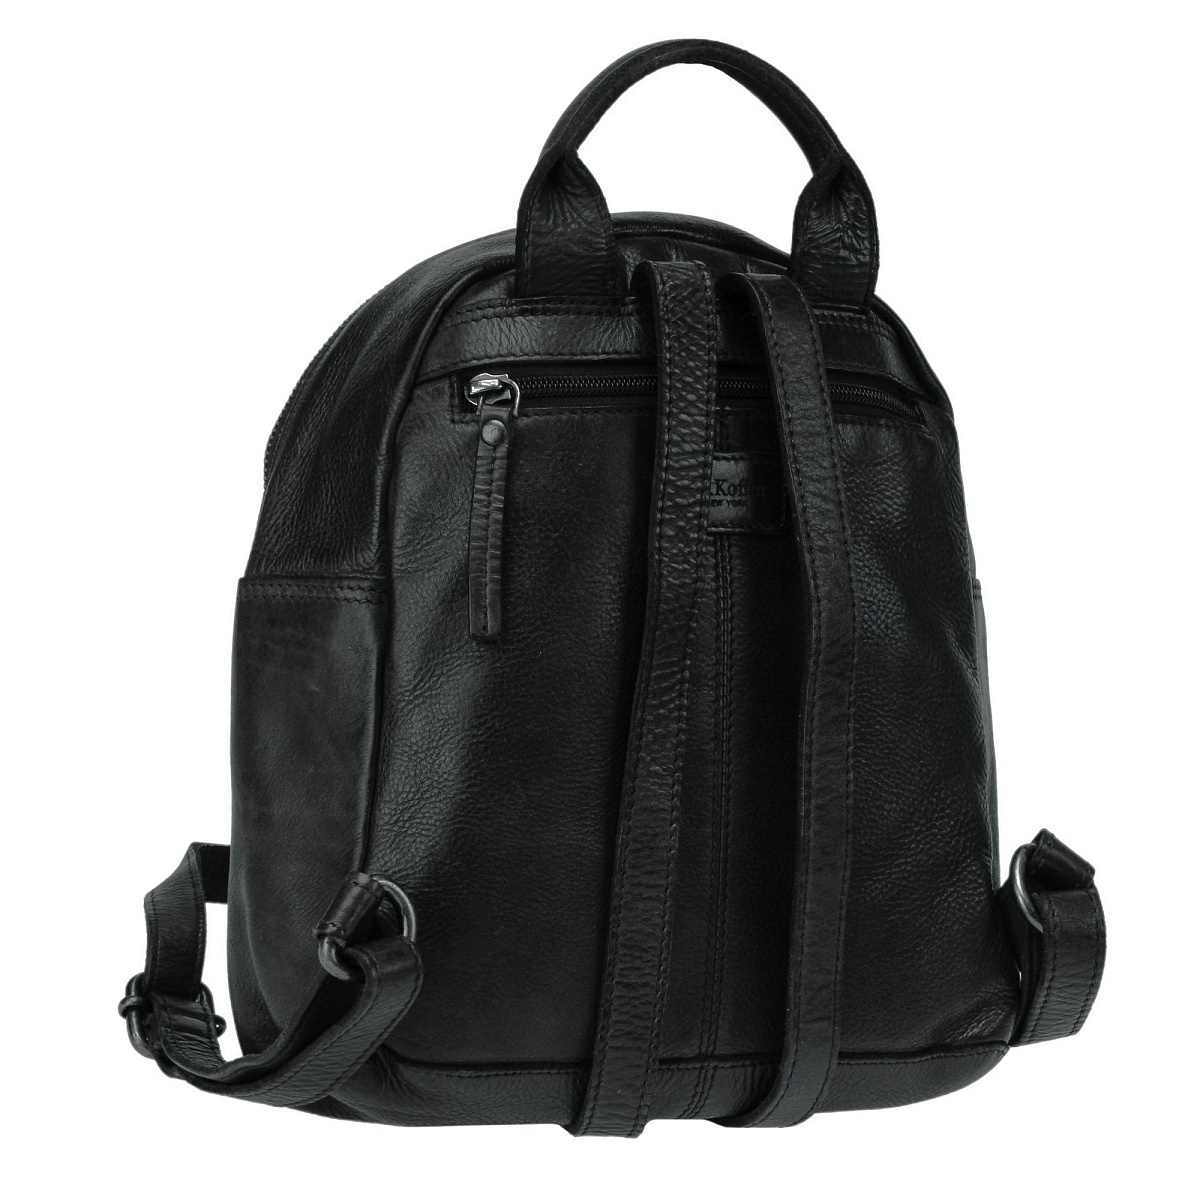 Simone чёрный рюкзак W620108-249-04